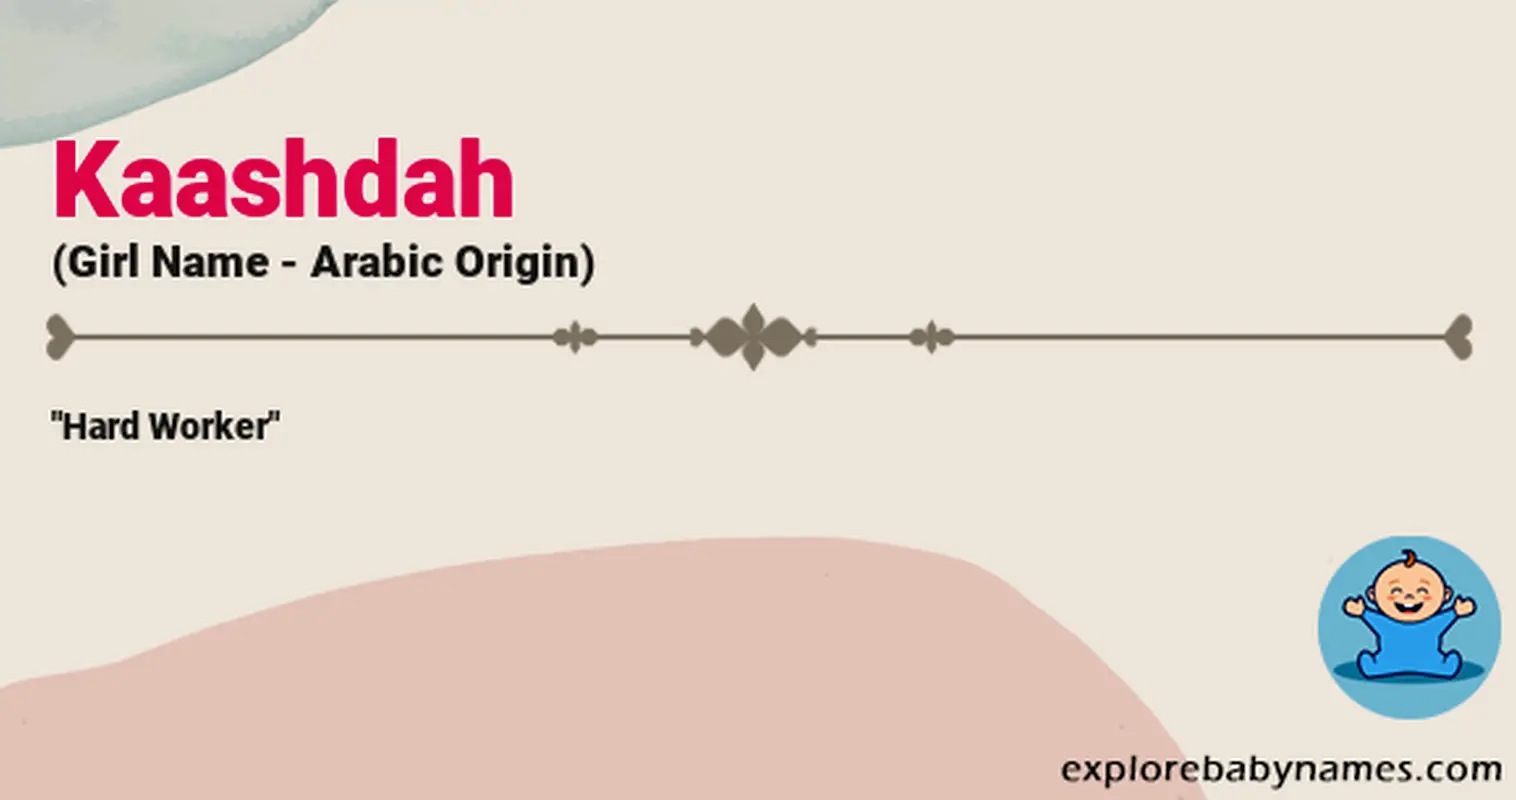 Meaning of Kaashdah